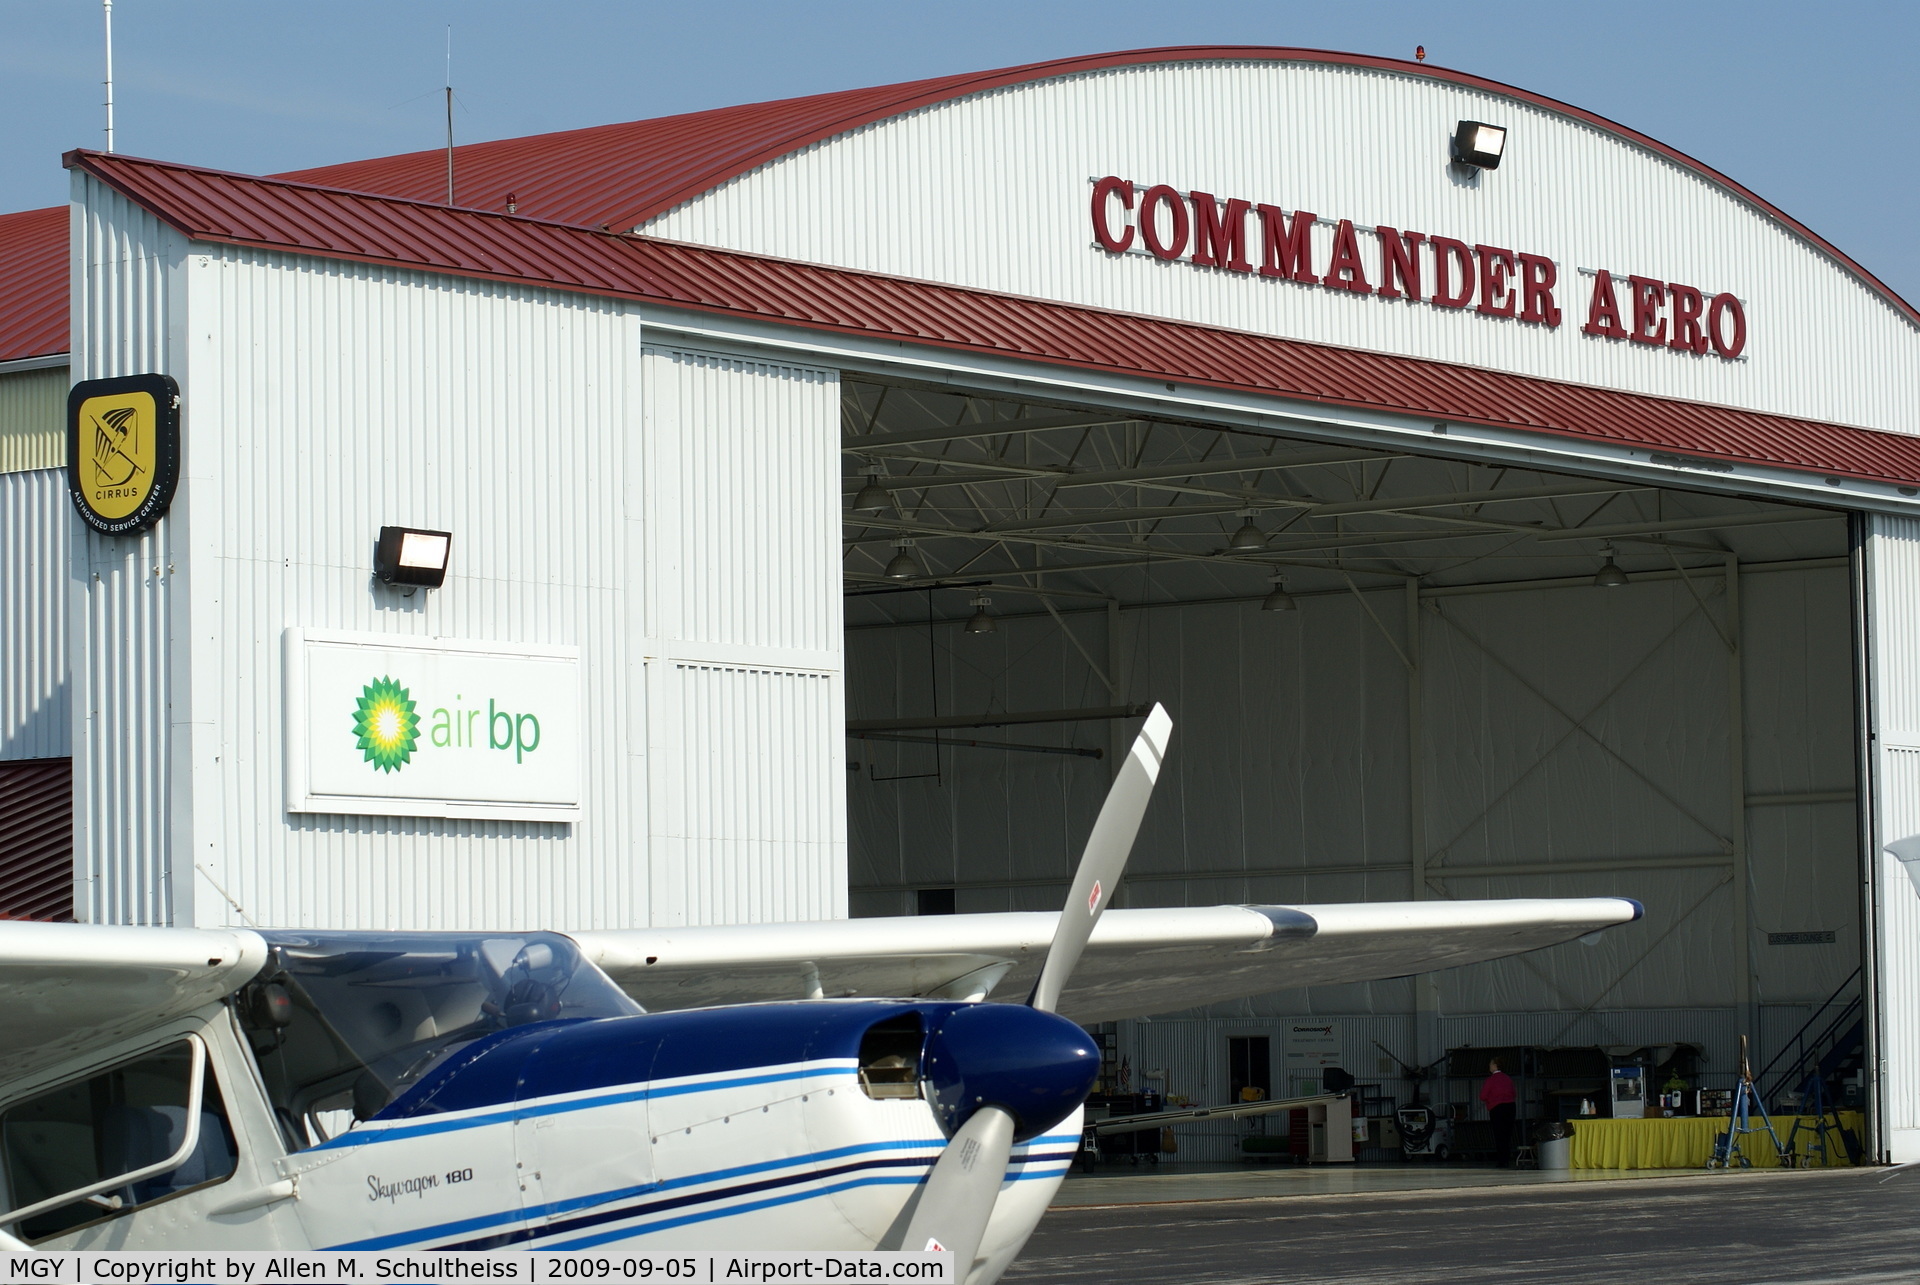 Dayton-wright Brothers Airport (MGY) - Commander-Aero